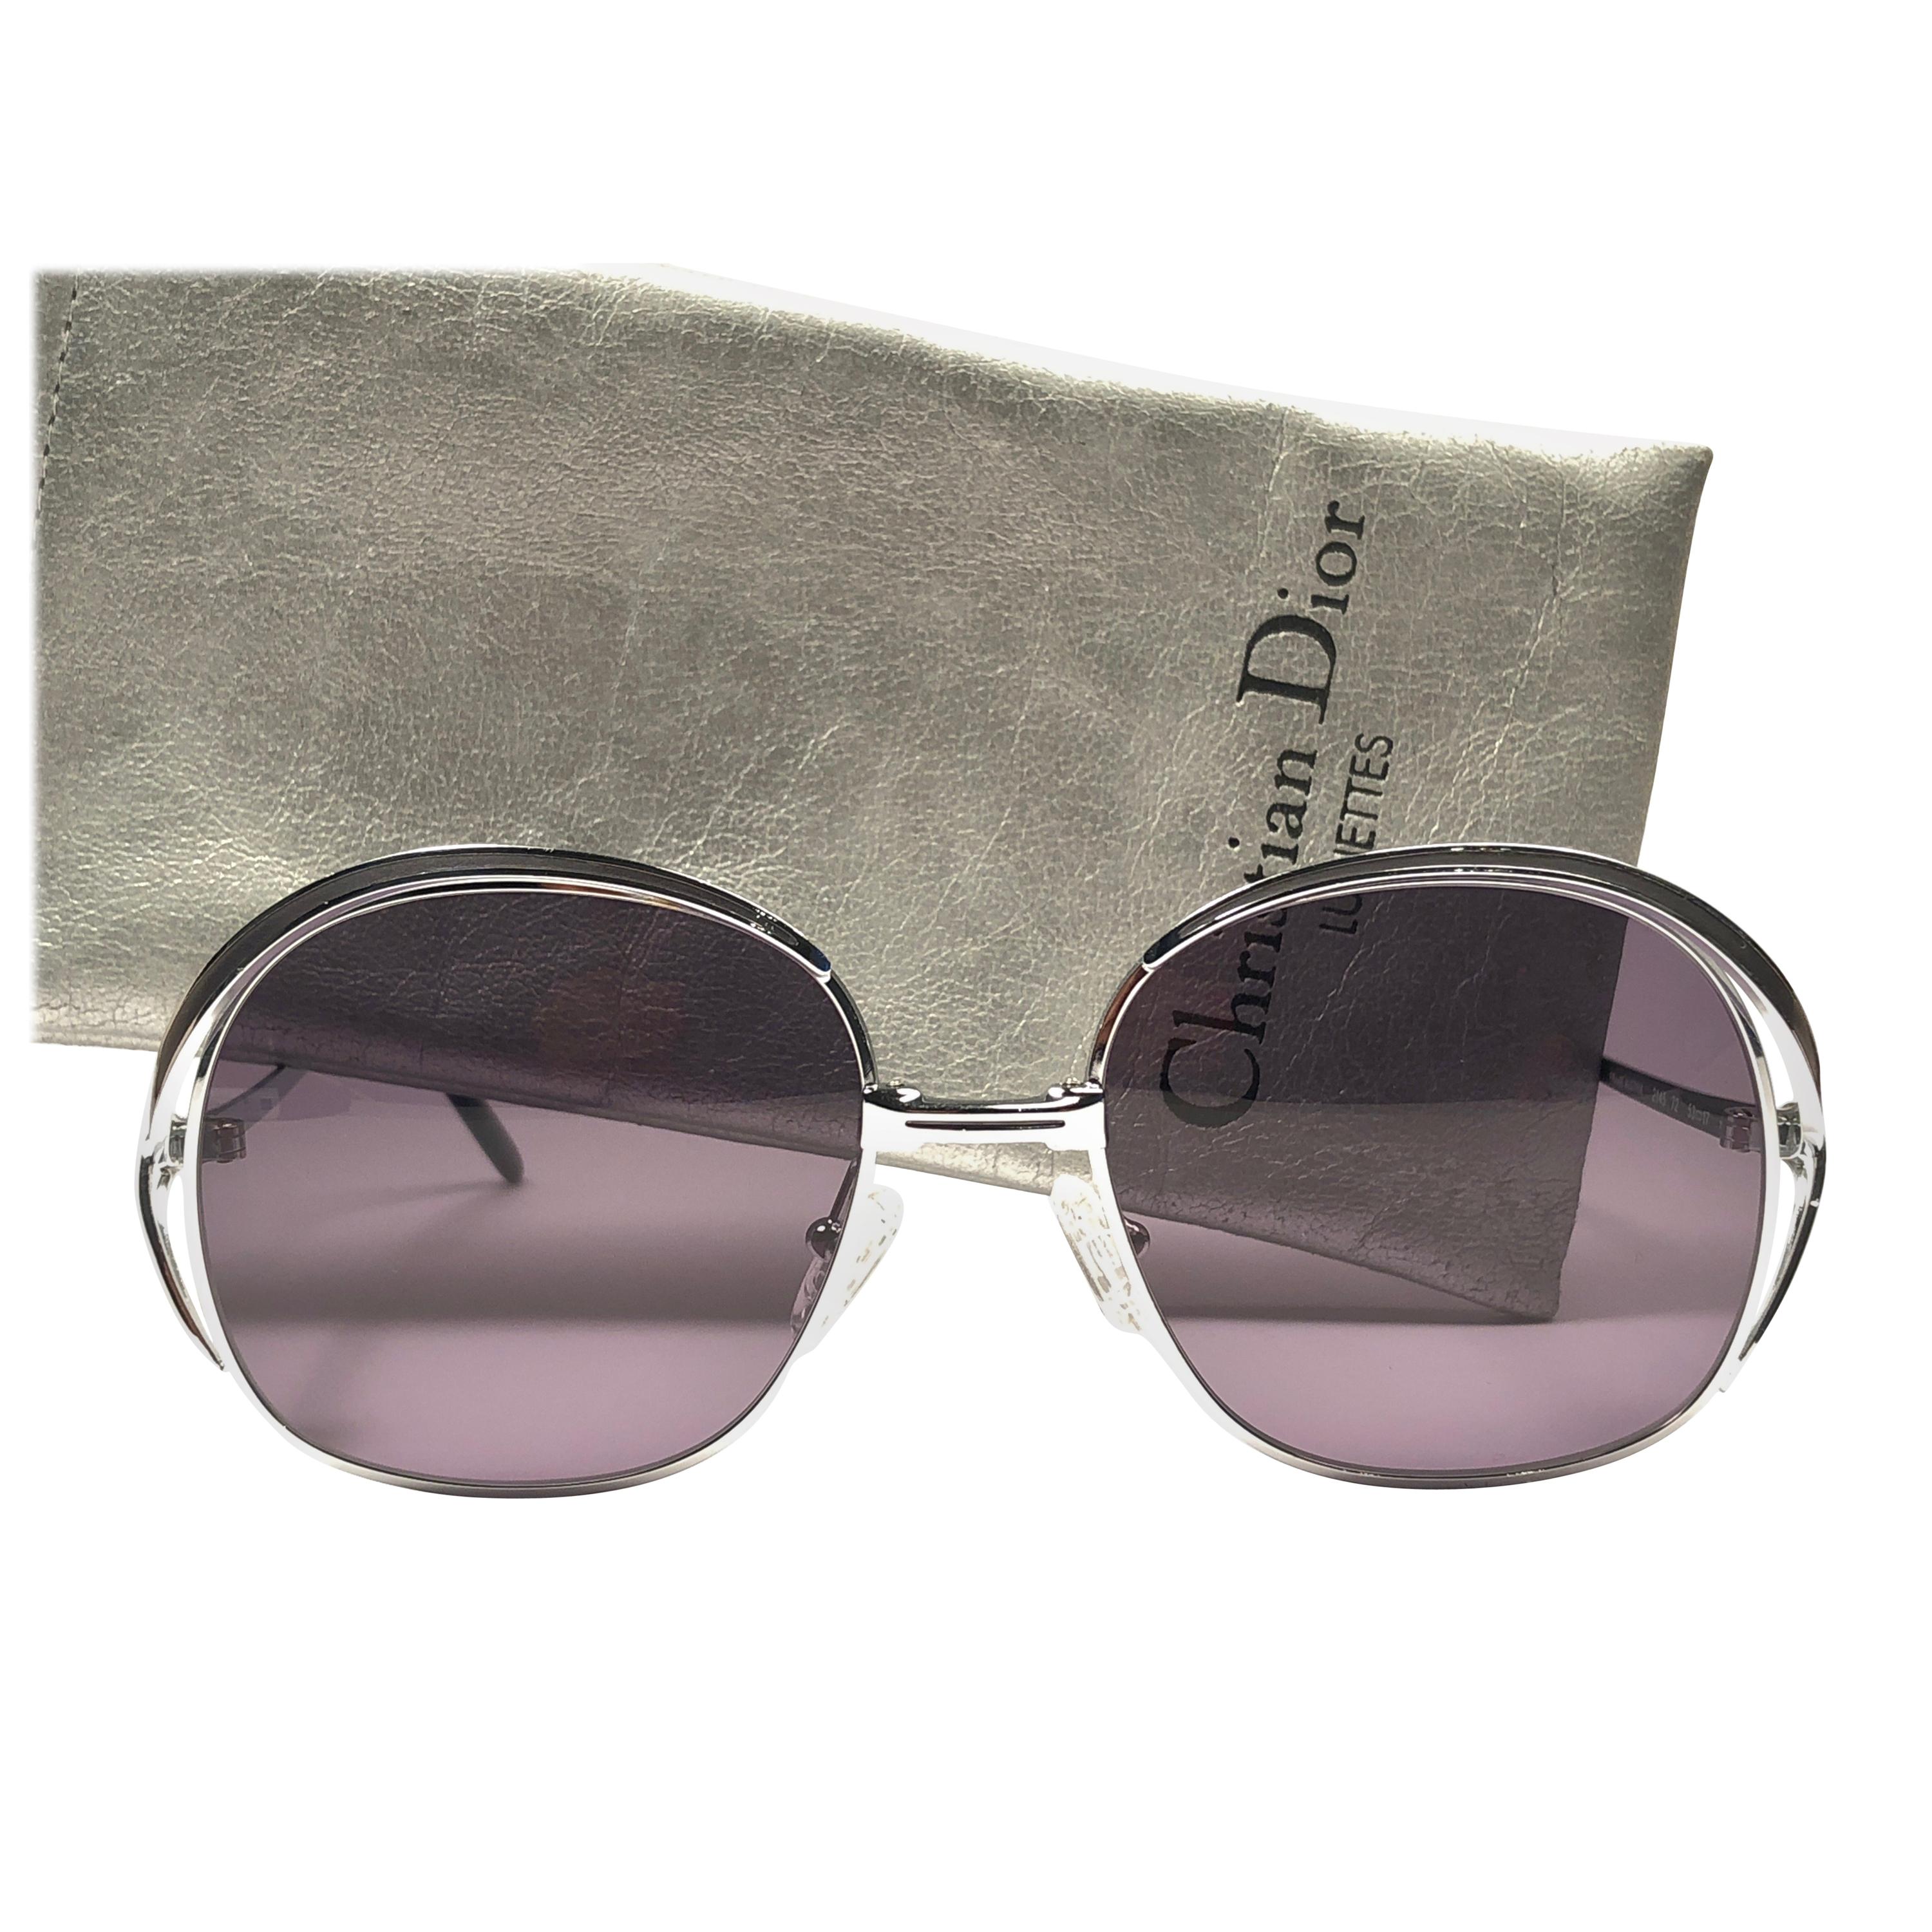 New Vintage Christian Dior 2145 Anthracite Silver Grey Sunglasses 1970's Austria